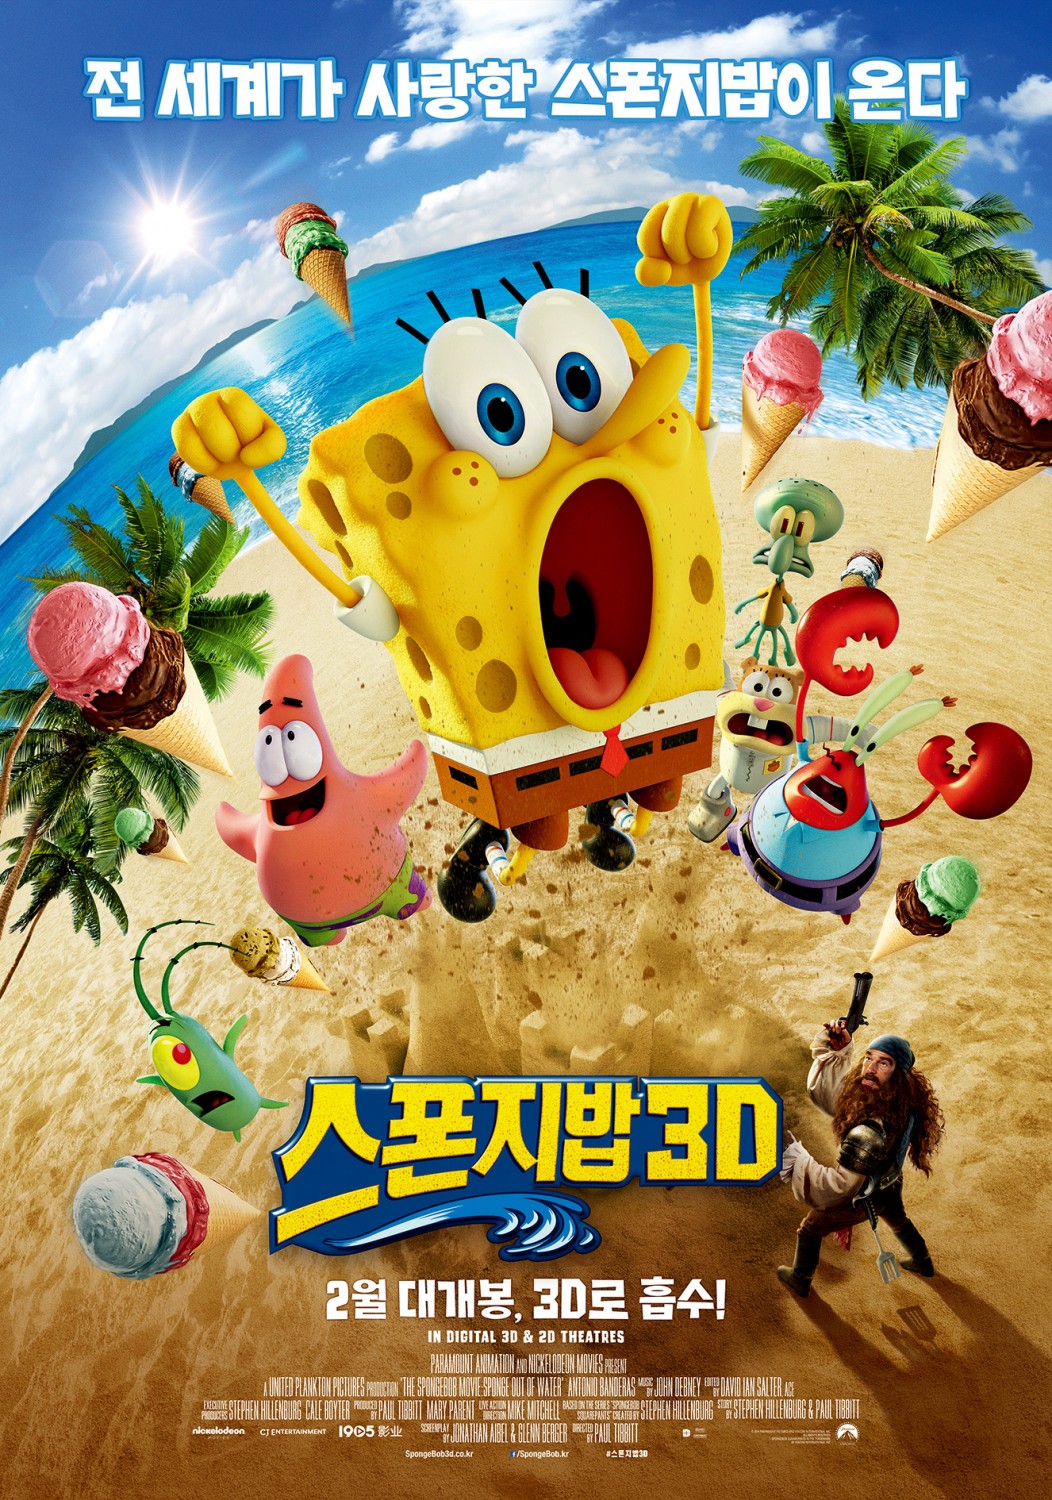 Extra Large Movie Poster Image for SpongeBob SquarePants 2 (#20 of 33)